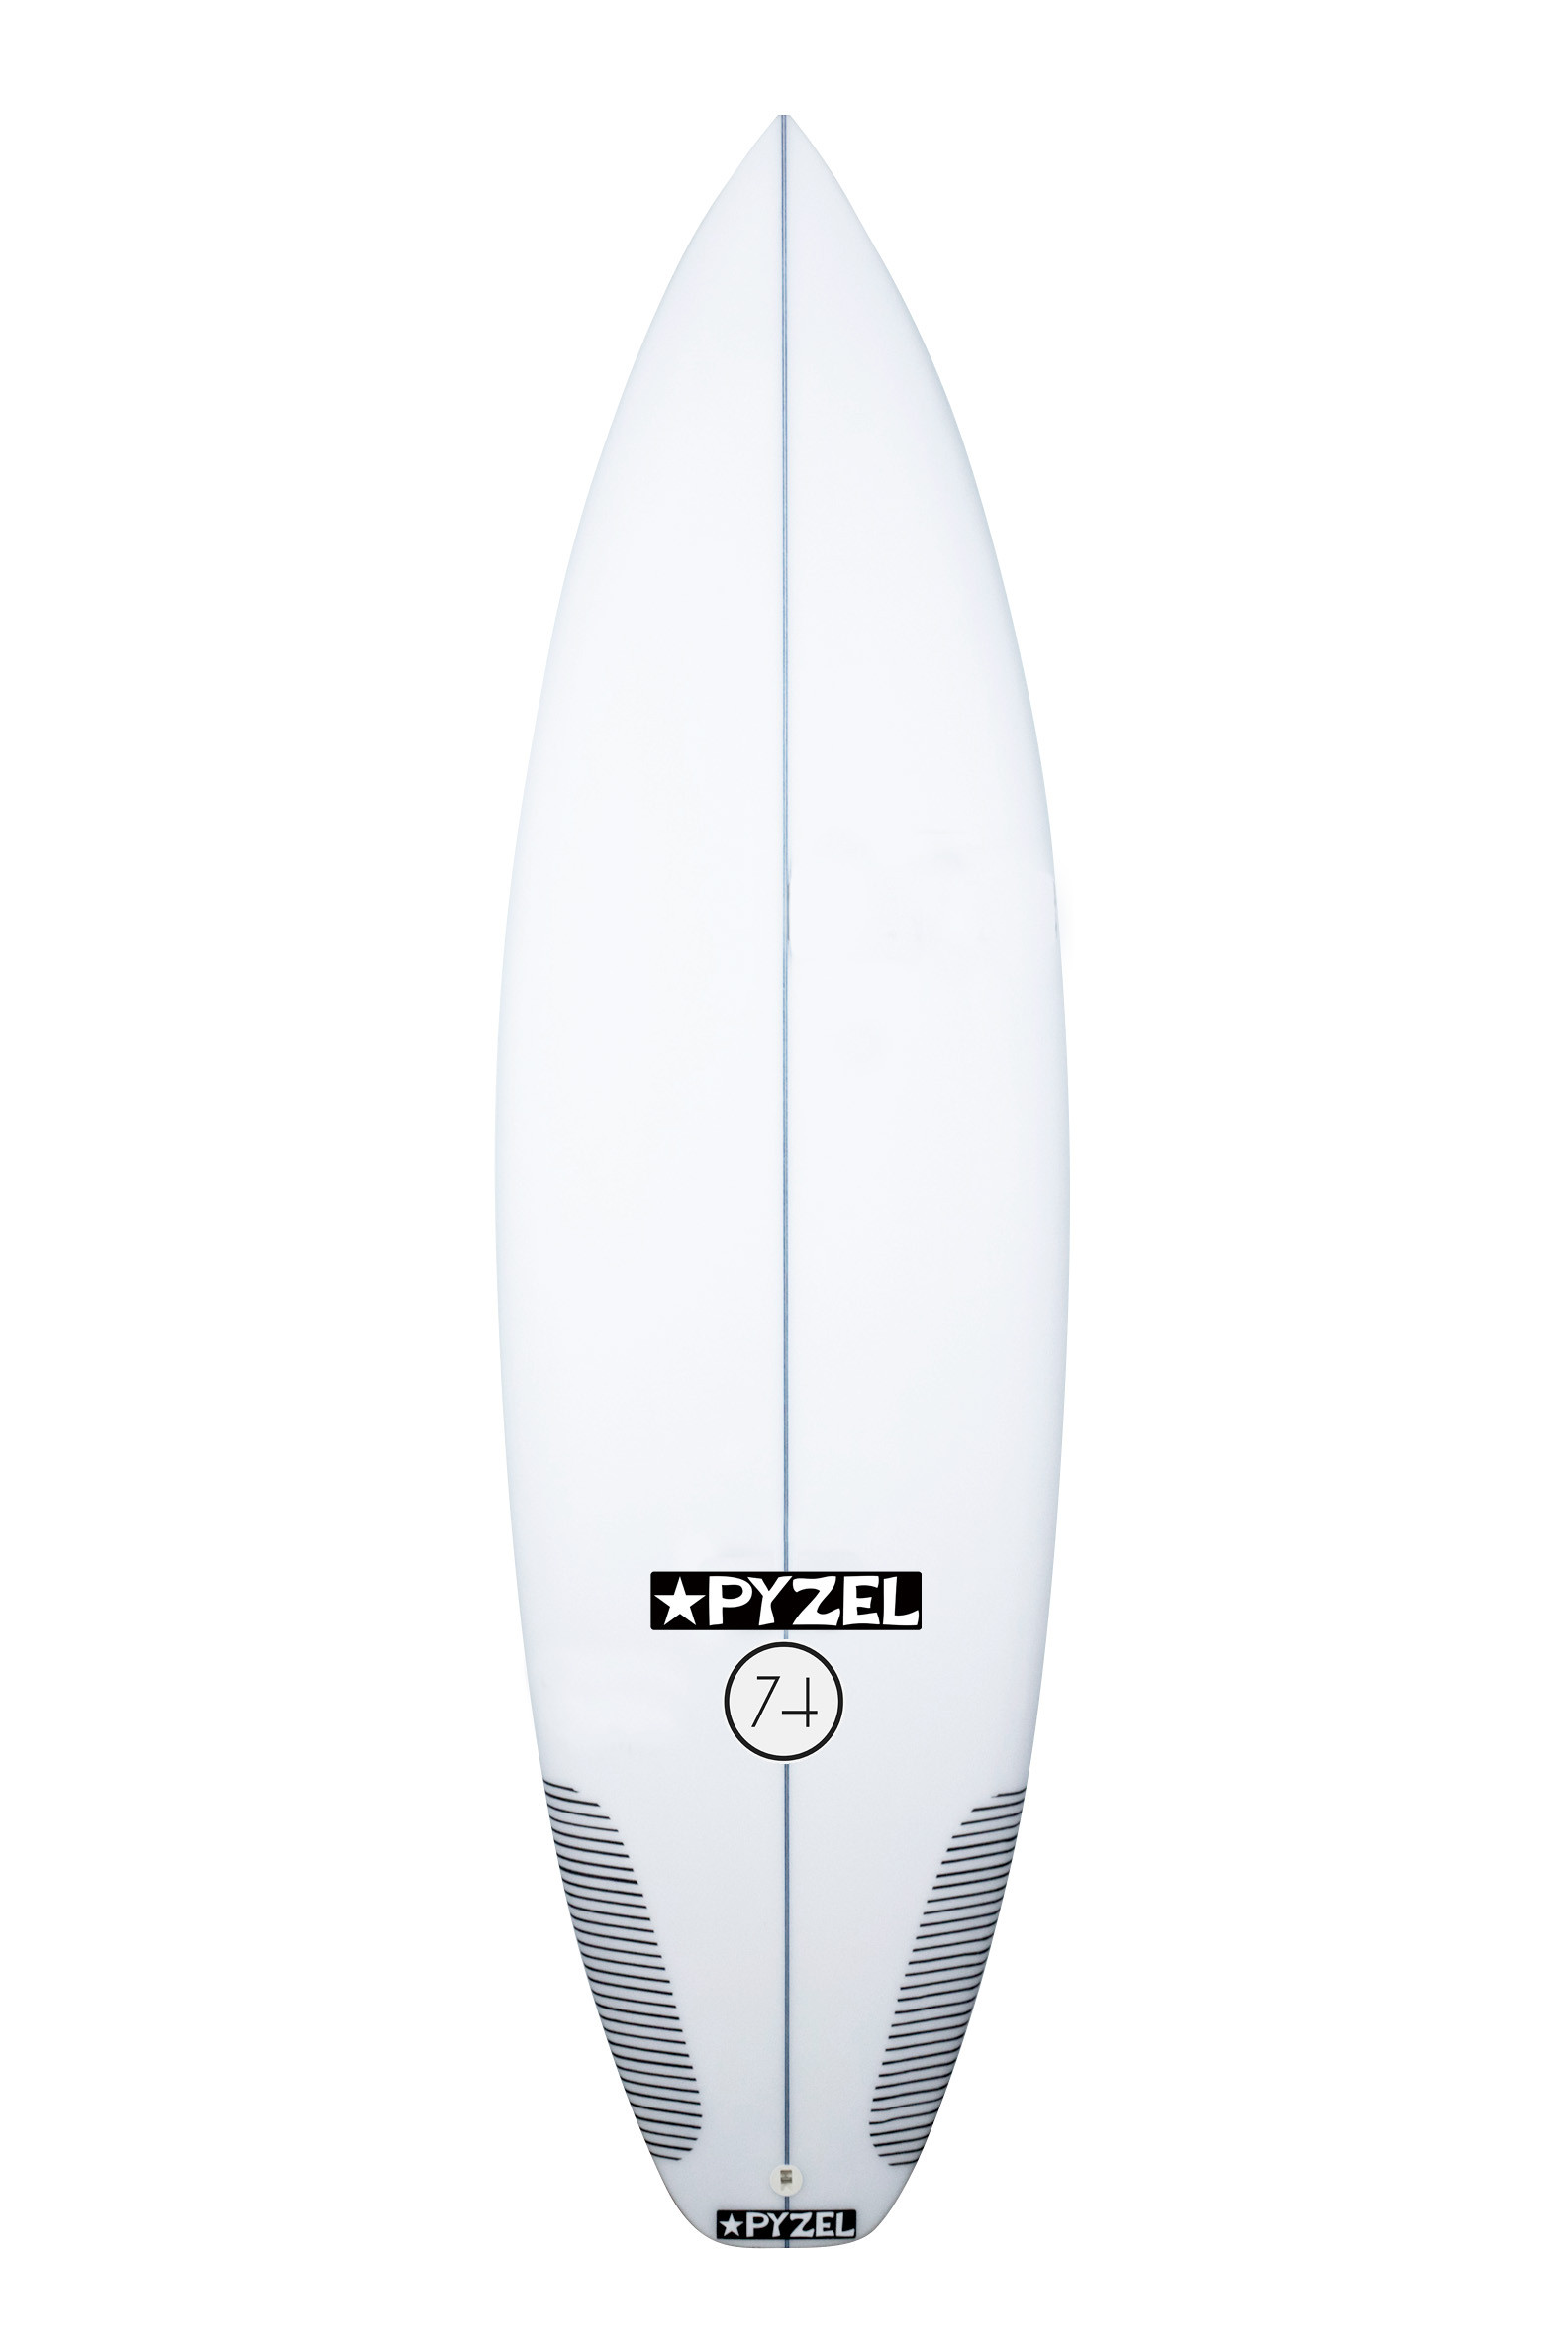 Pyzel Surfboards - Radius